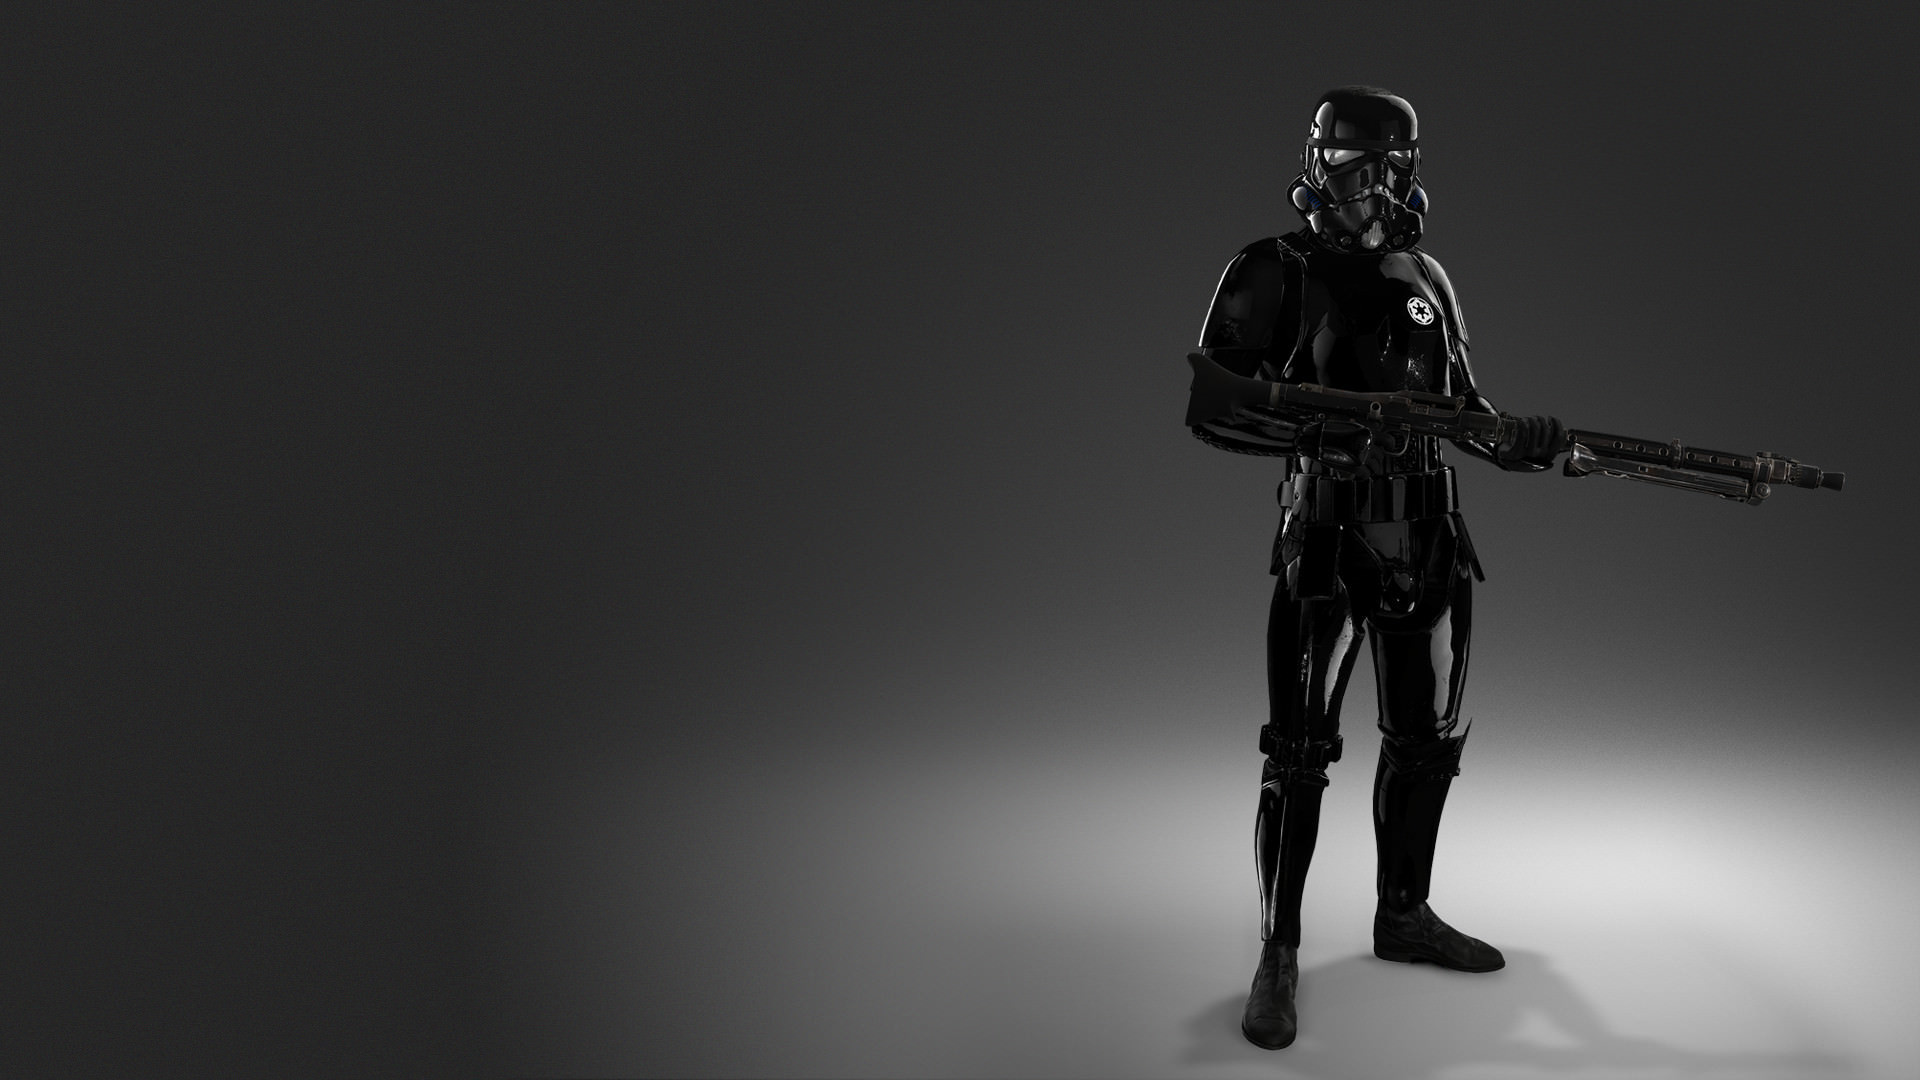 1920x1080 Shadow Trooper confirmed as appearance option! : StarWarsBattlefront